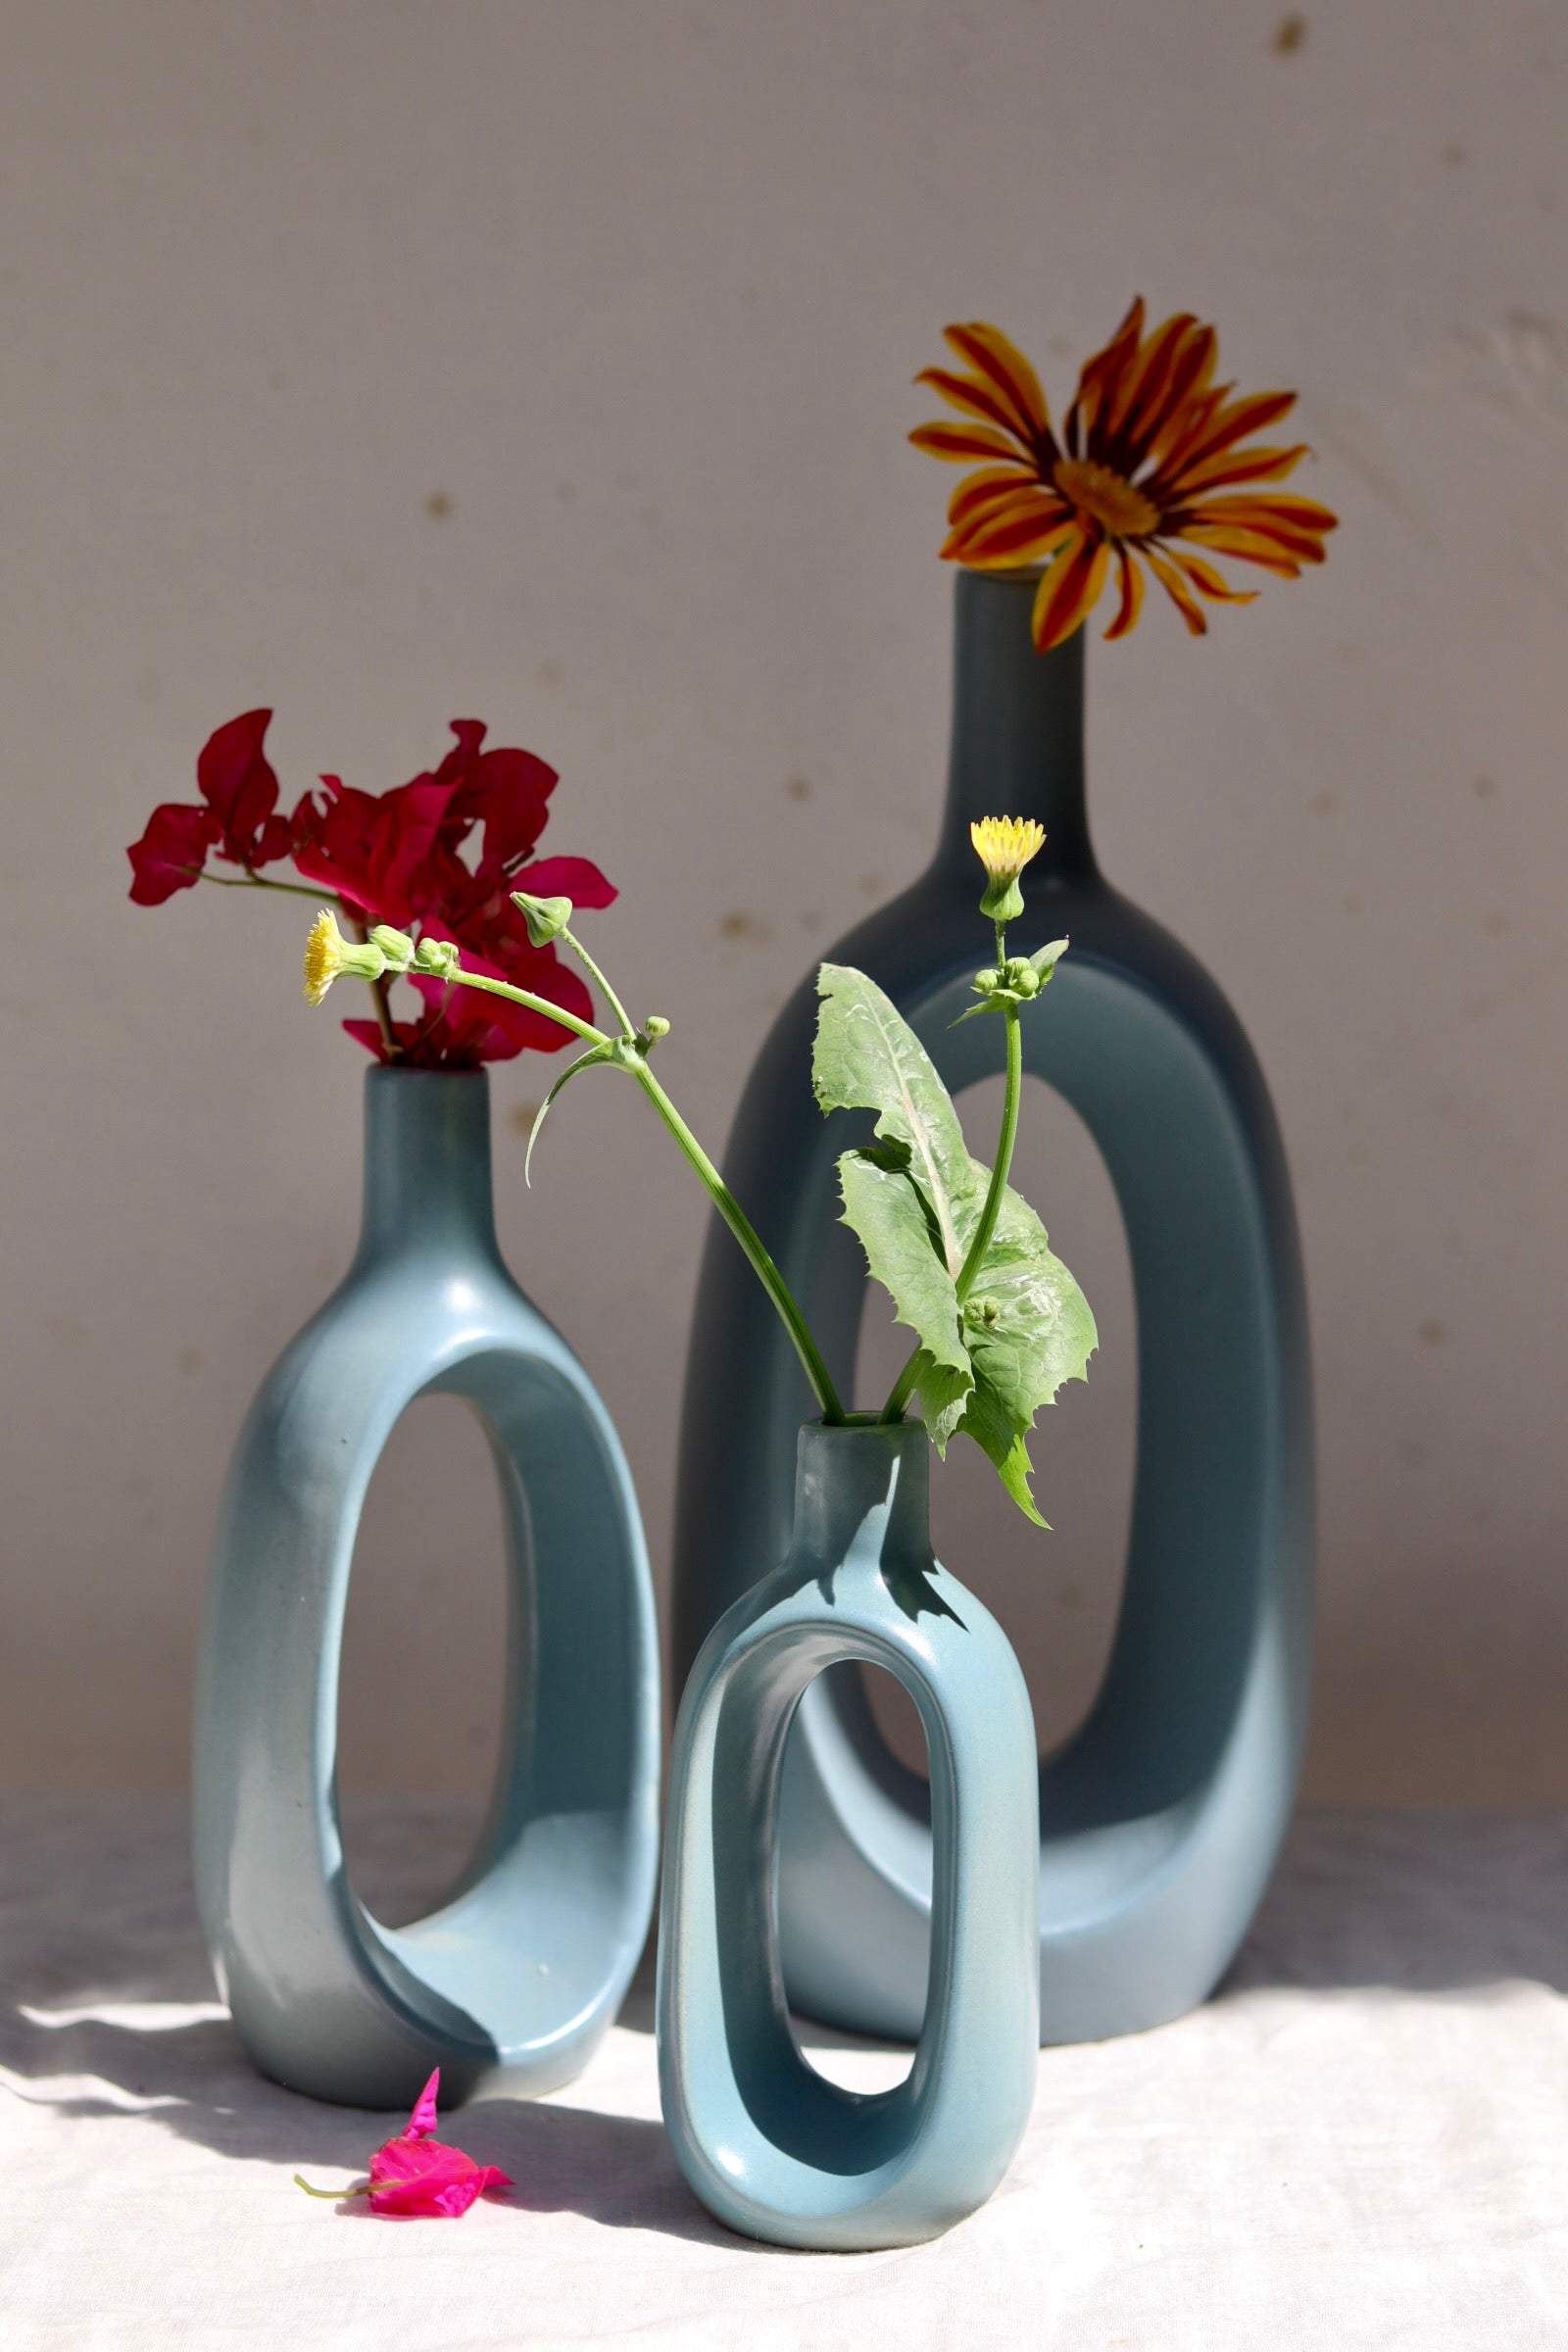 Three contour vases with flowers